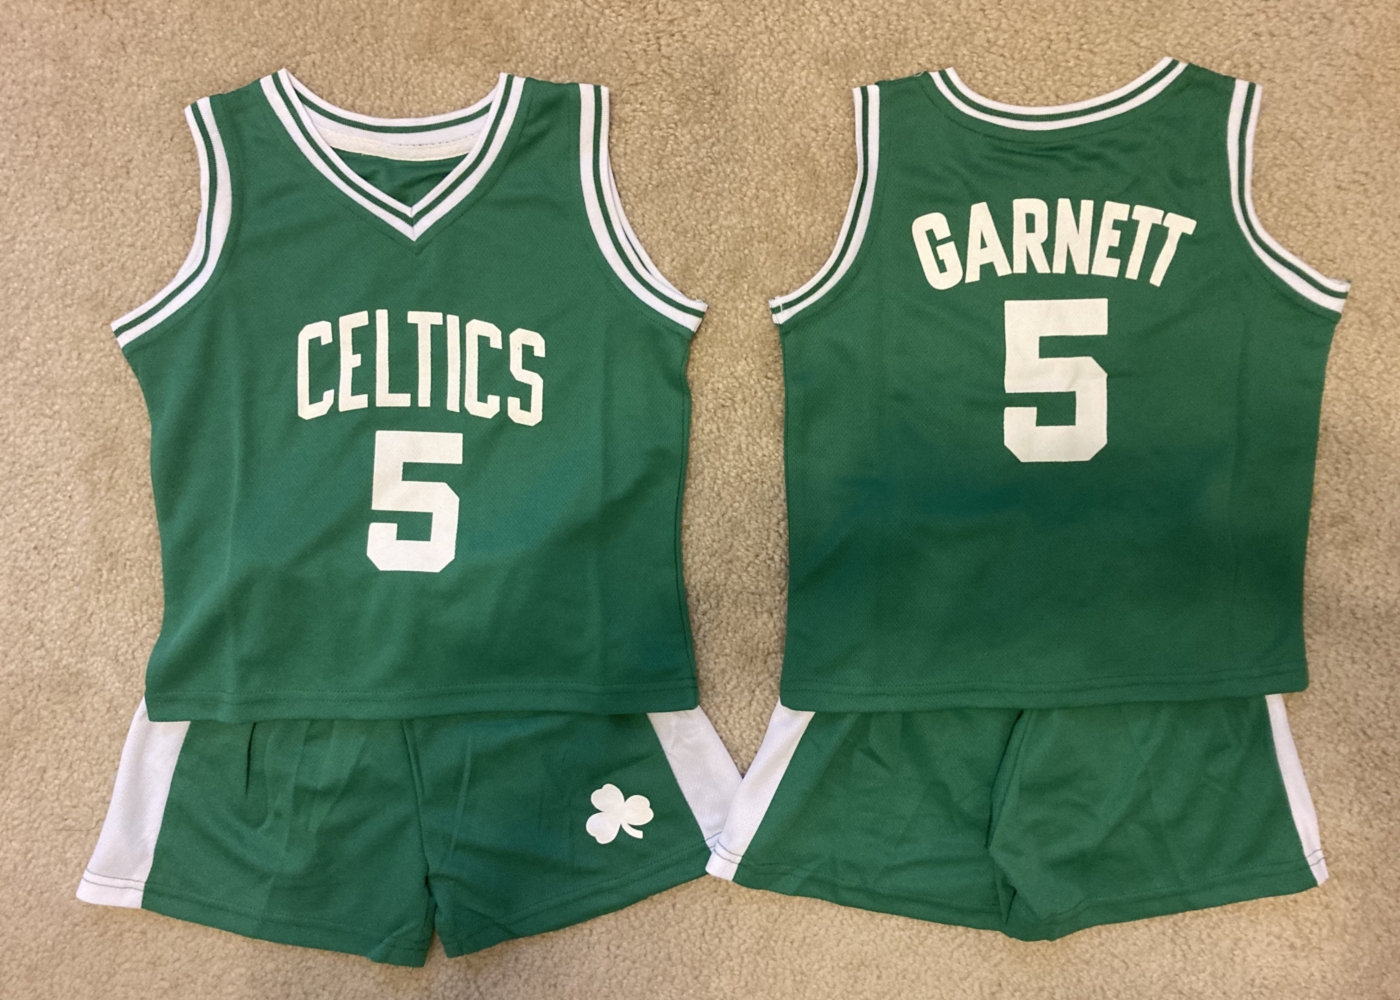 Kids Toddler Kevin Garnett Basketball NBA Uniform - Jersey & Shorts - Celtics  - Sizes 2T-4T & 6